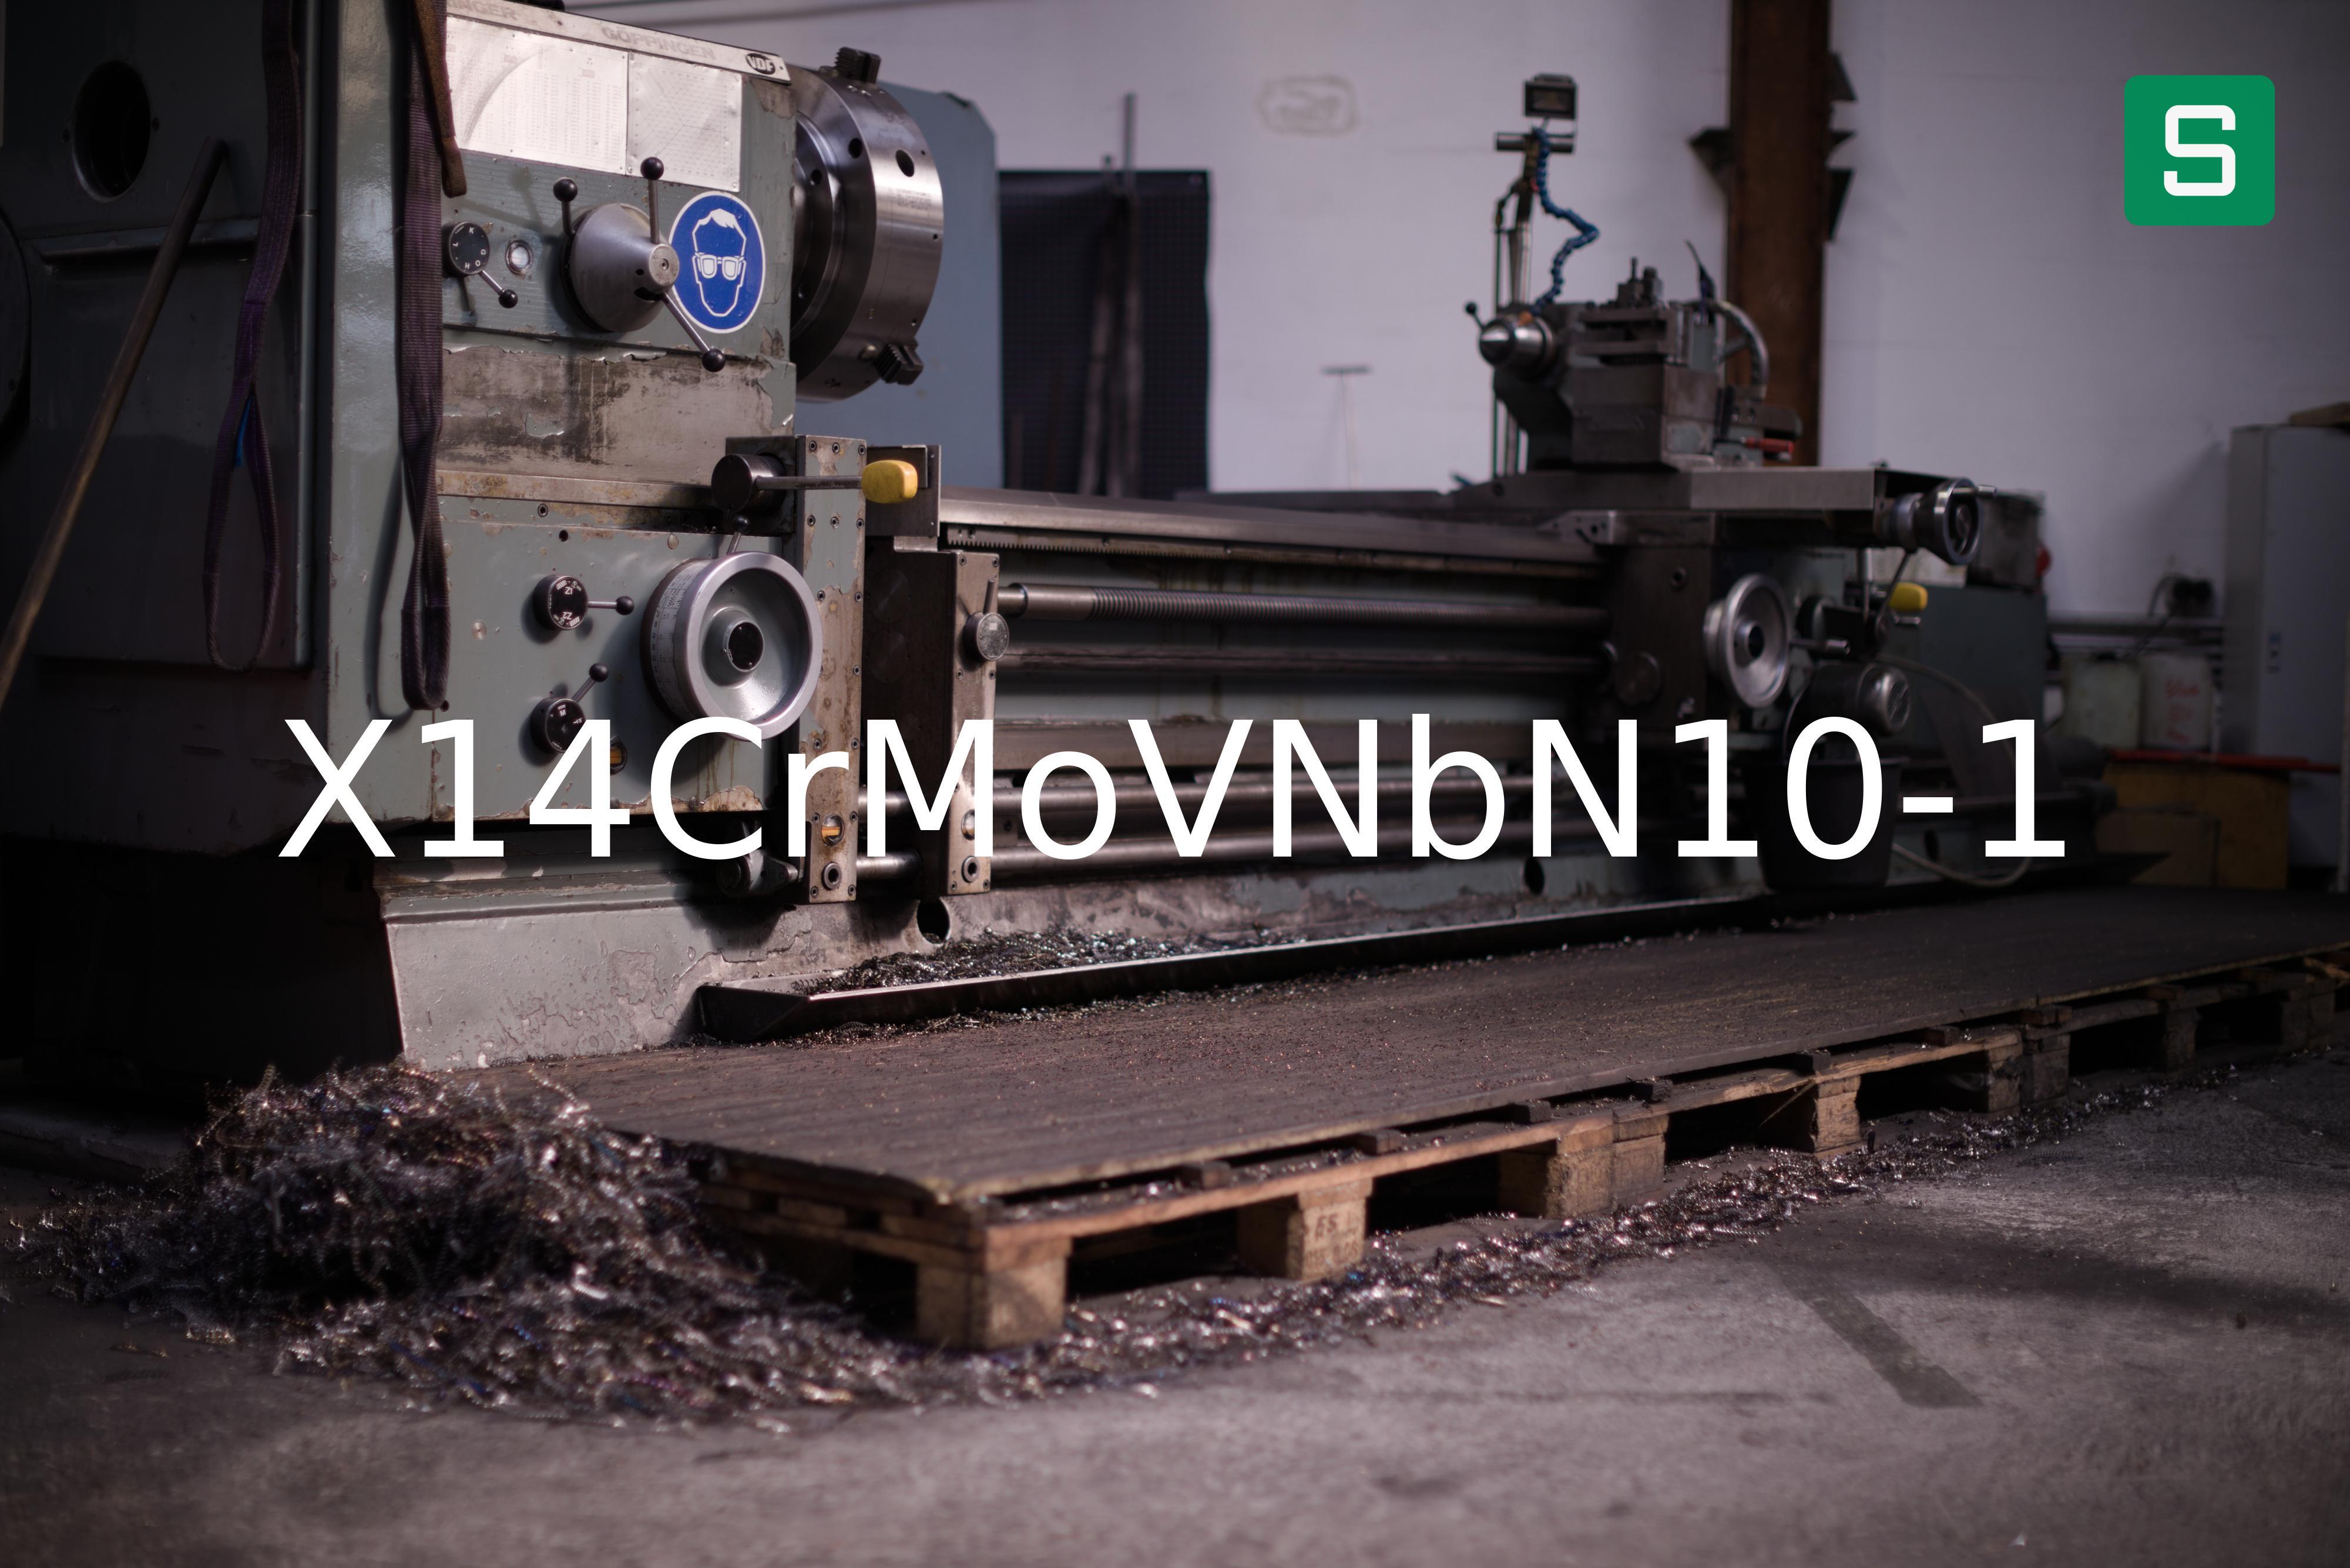 Steel Material: X14CrMoVNbN10-1